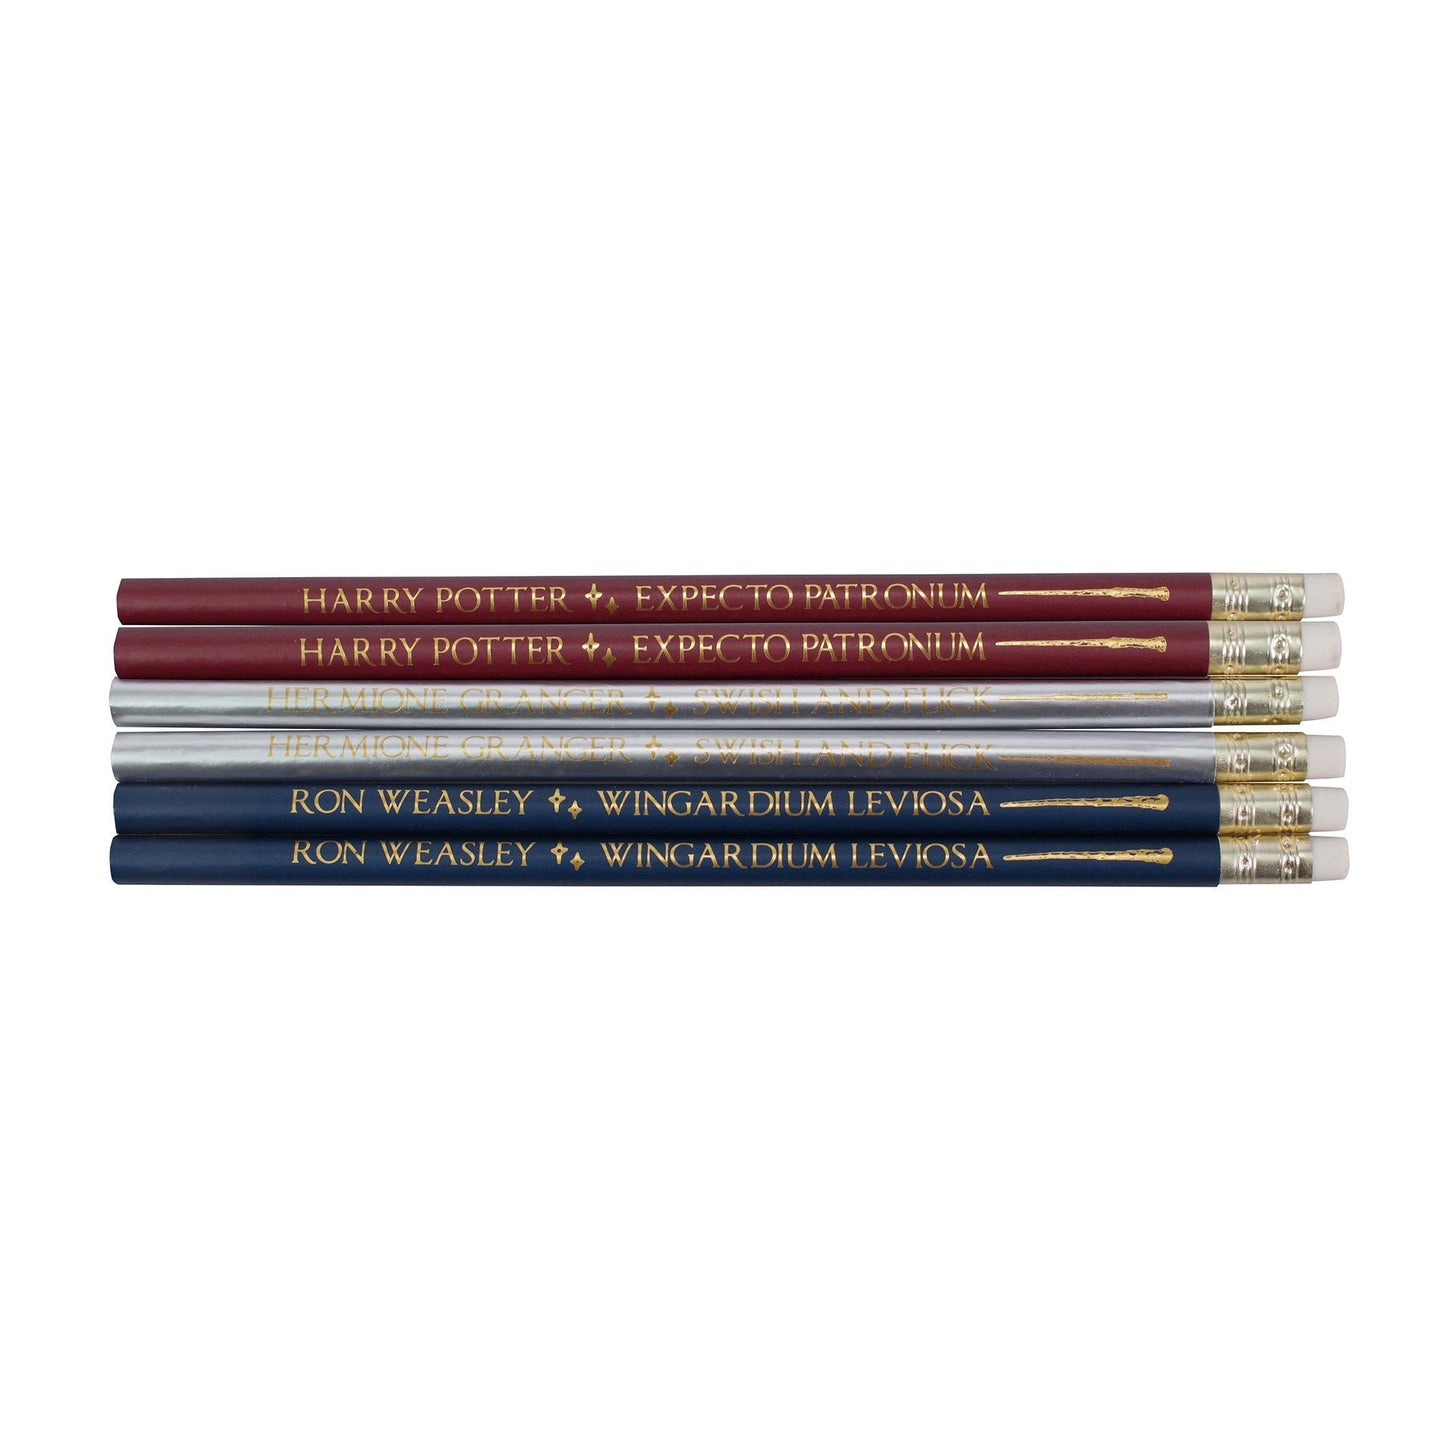 Set of 6 Harry Potter pencils - Wands